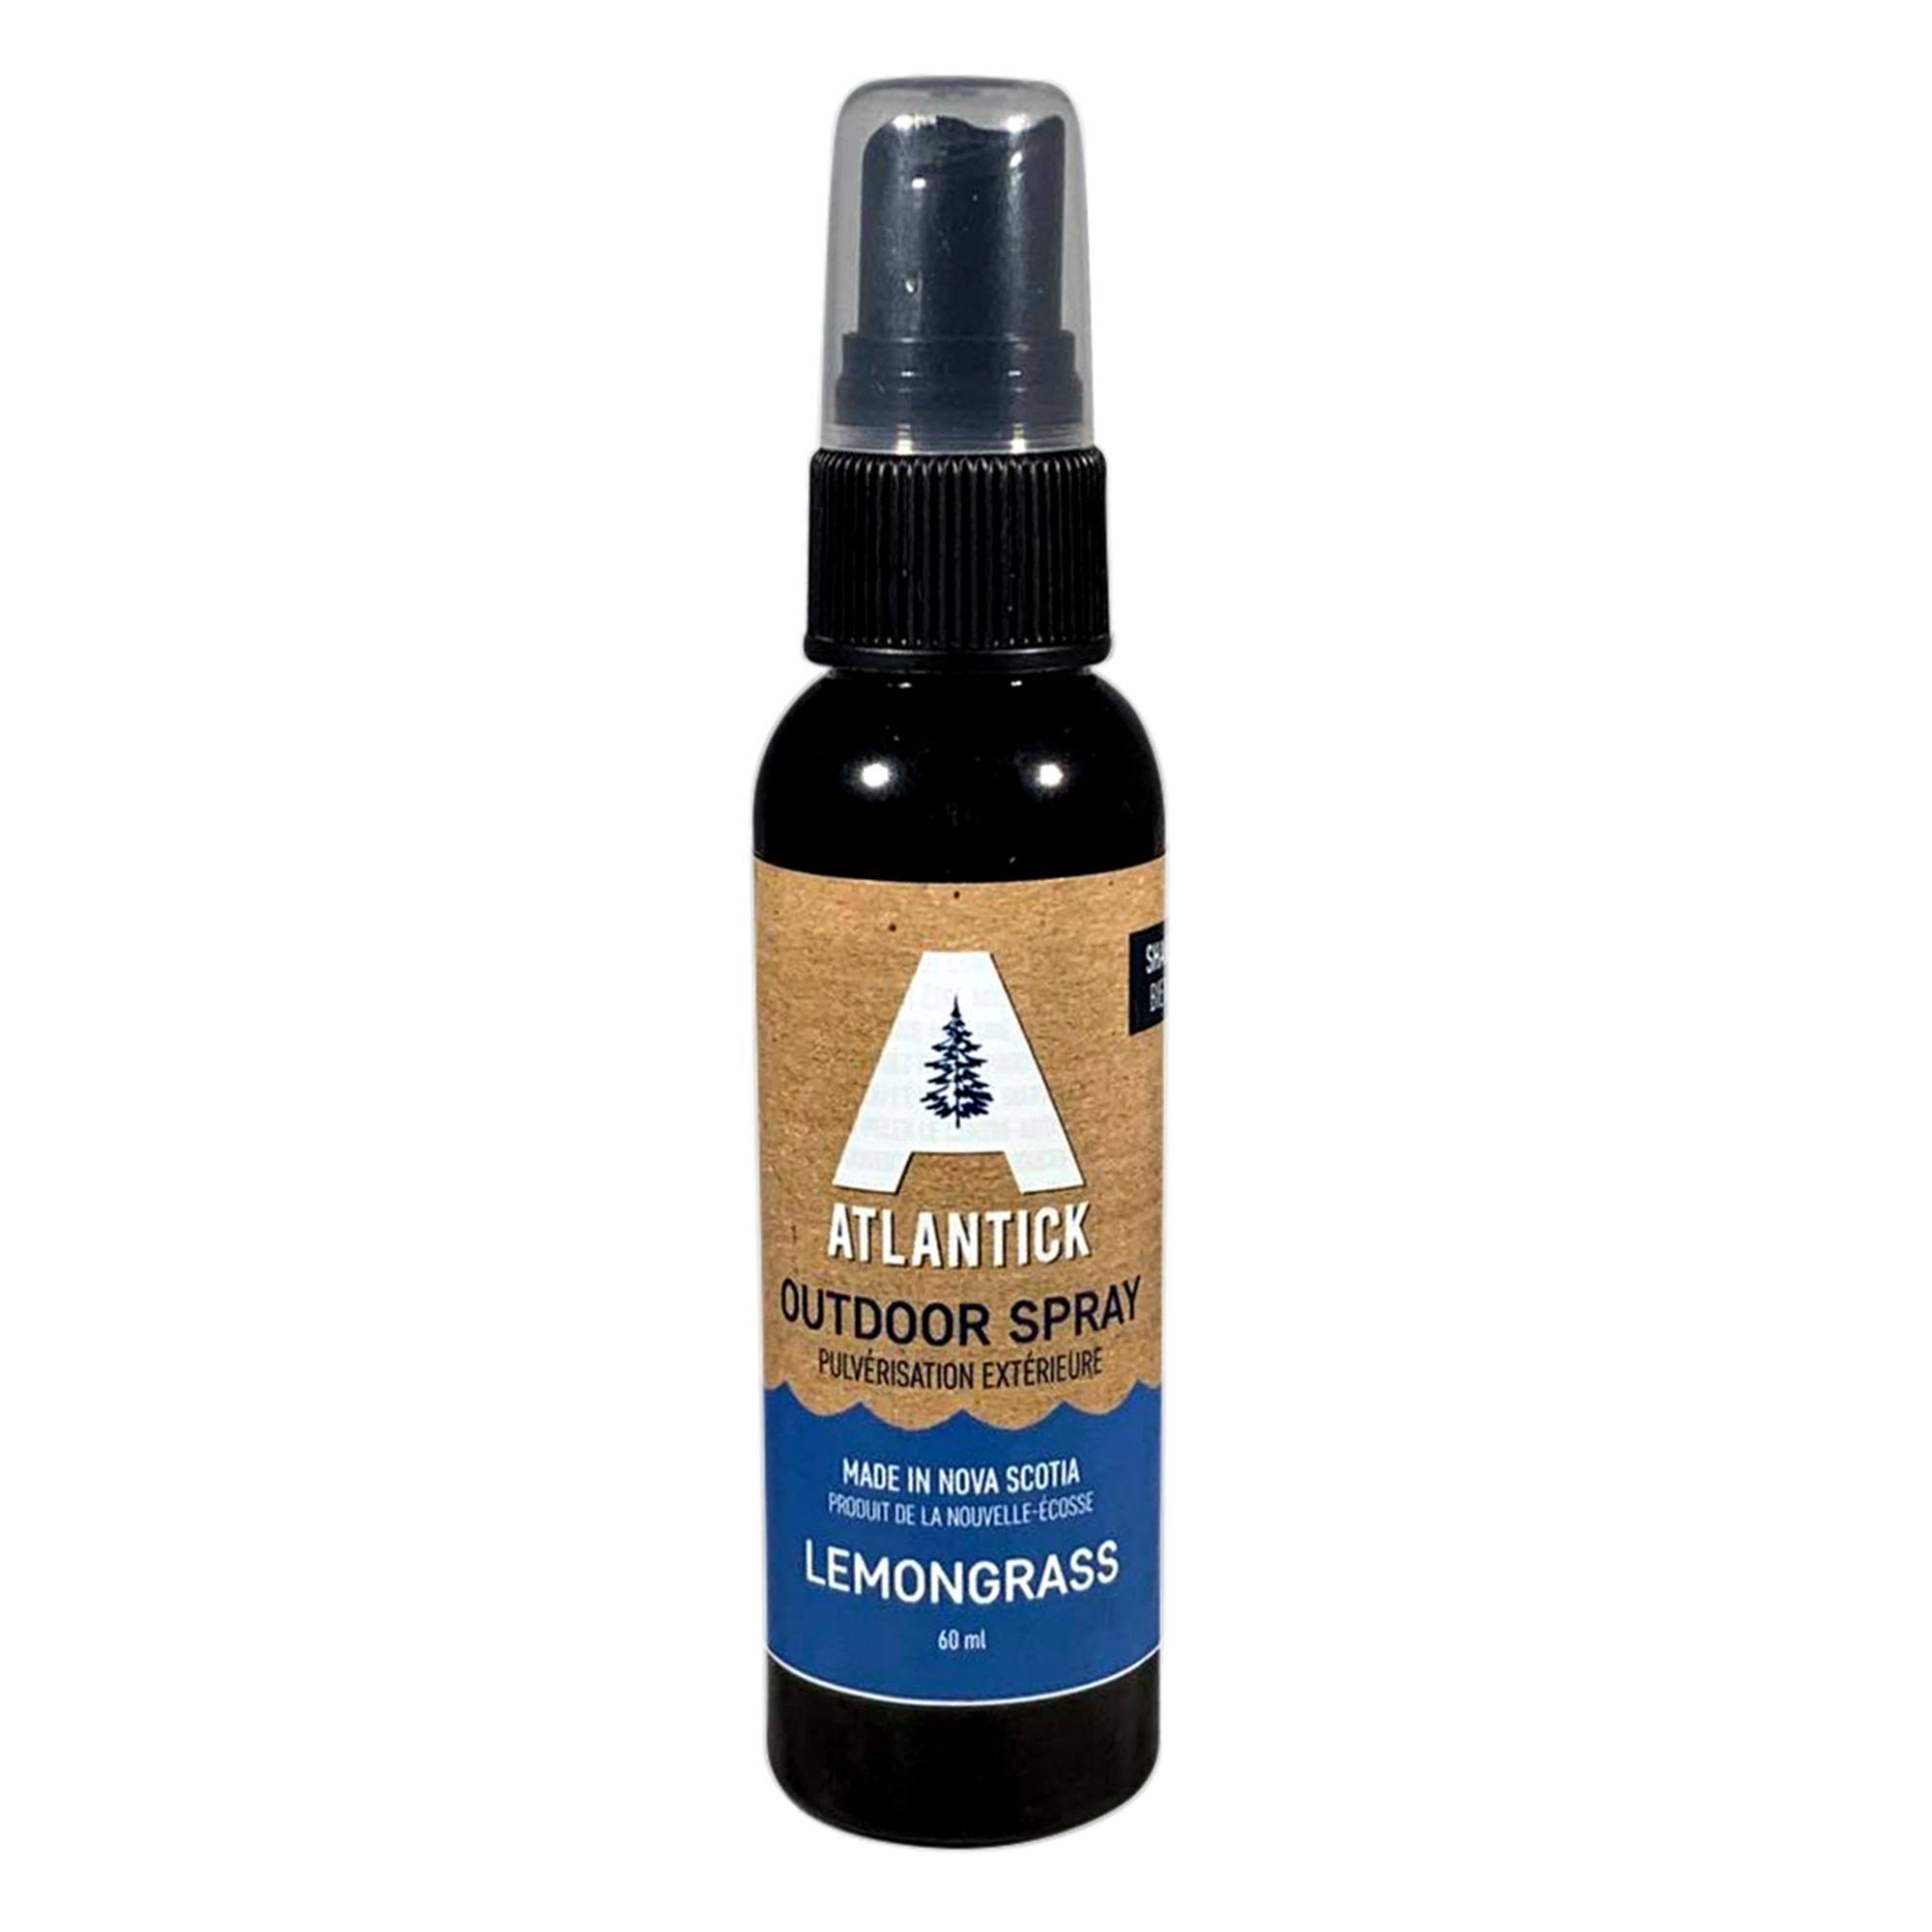 Atlantick Lemongrass Outdoor Spray | Vitarock